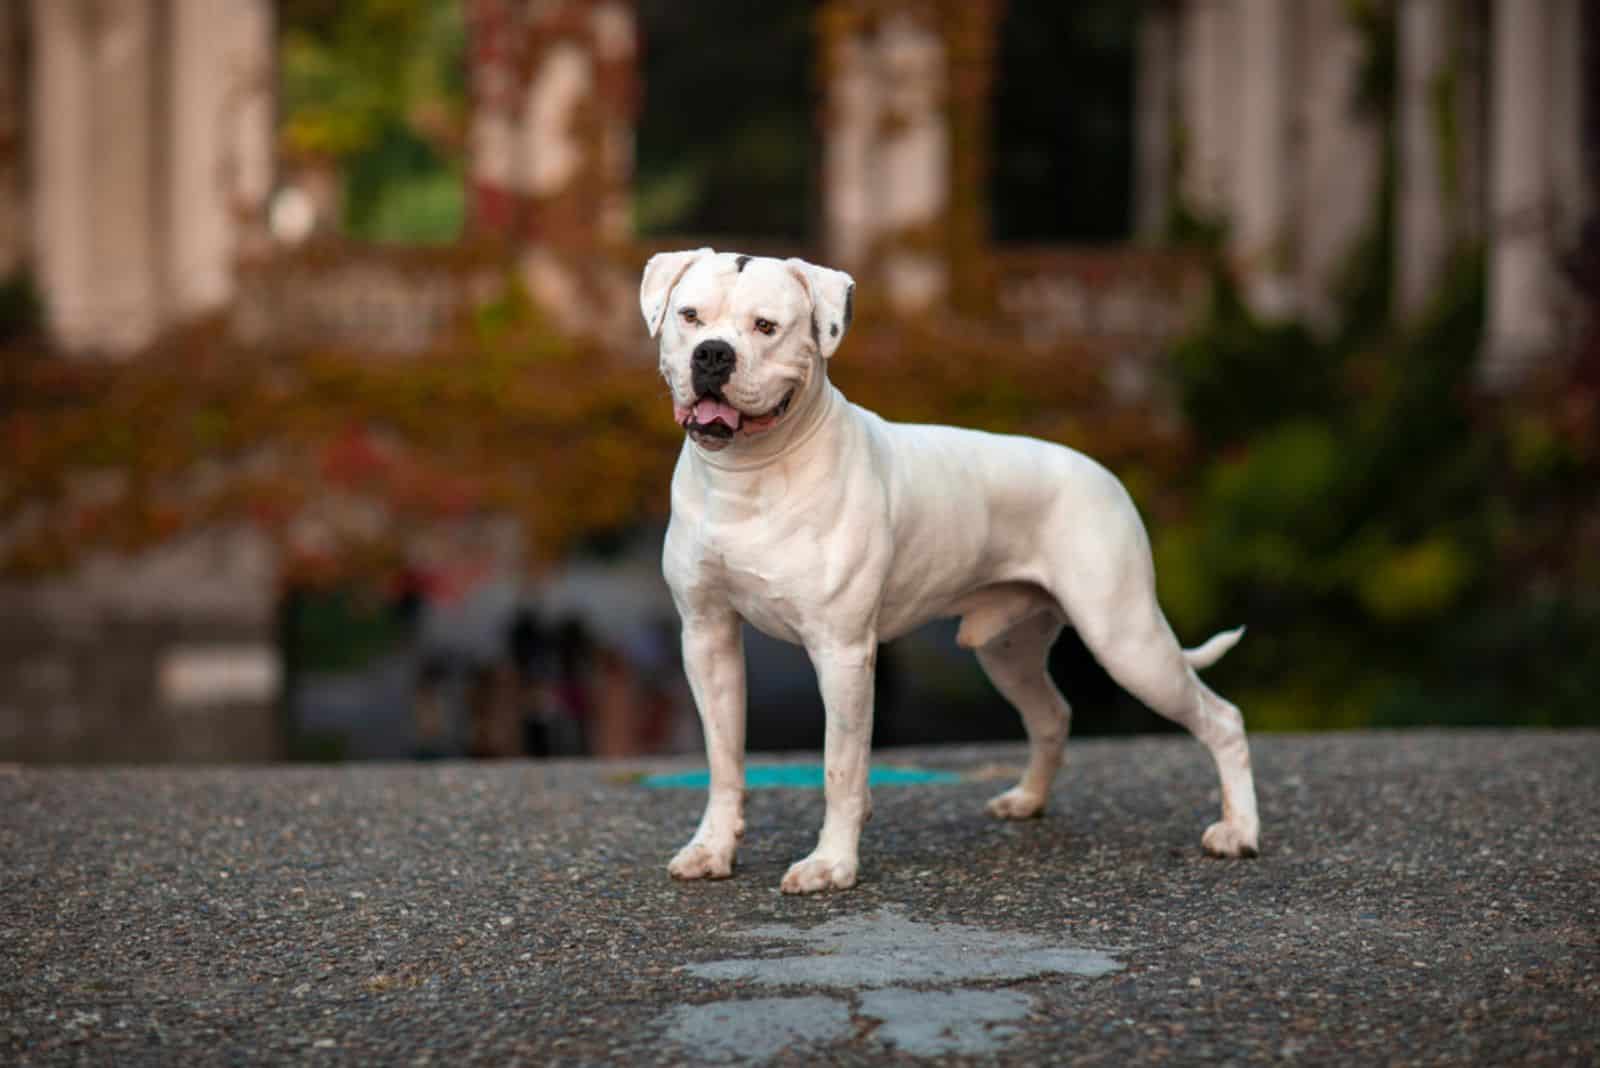 White dog american bulldog 